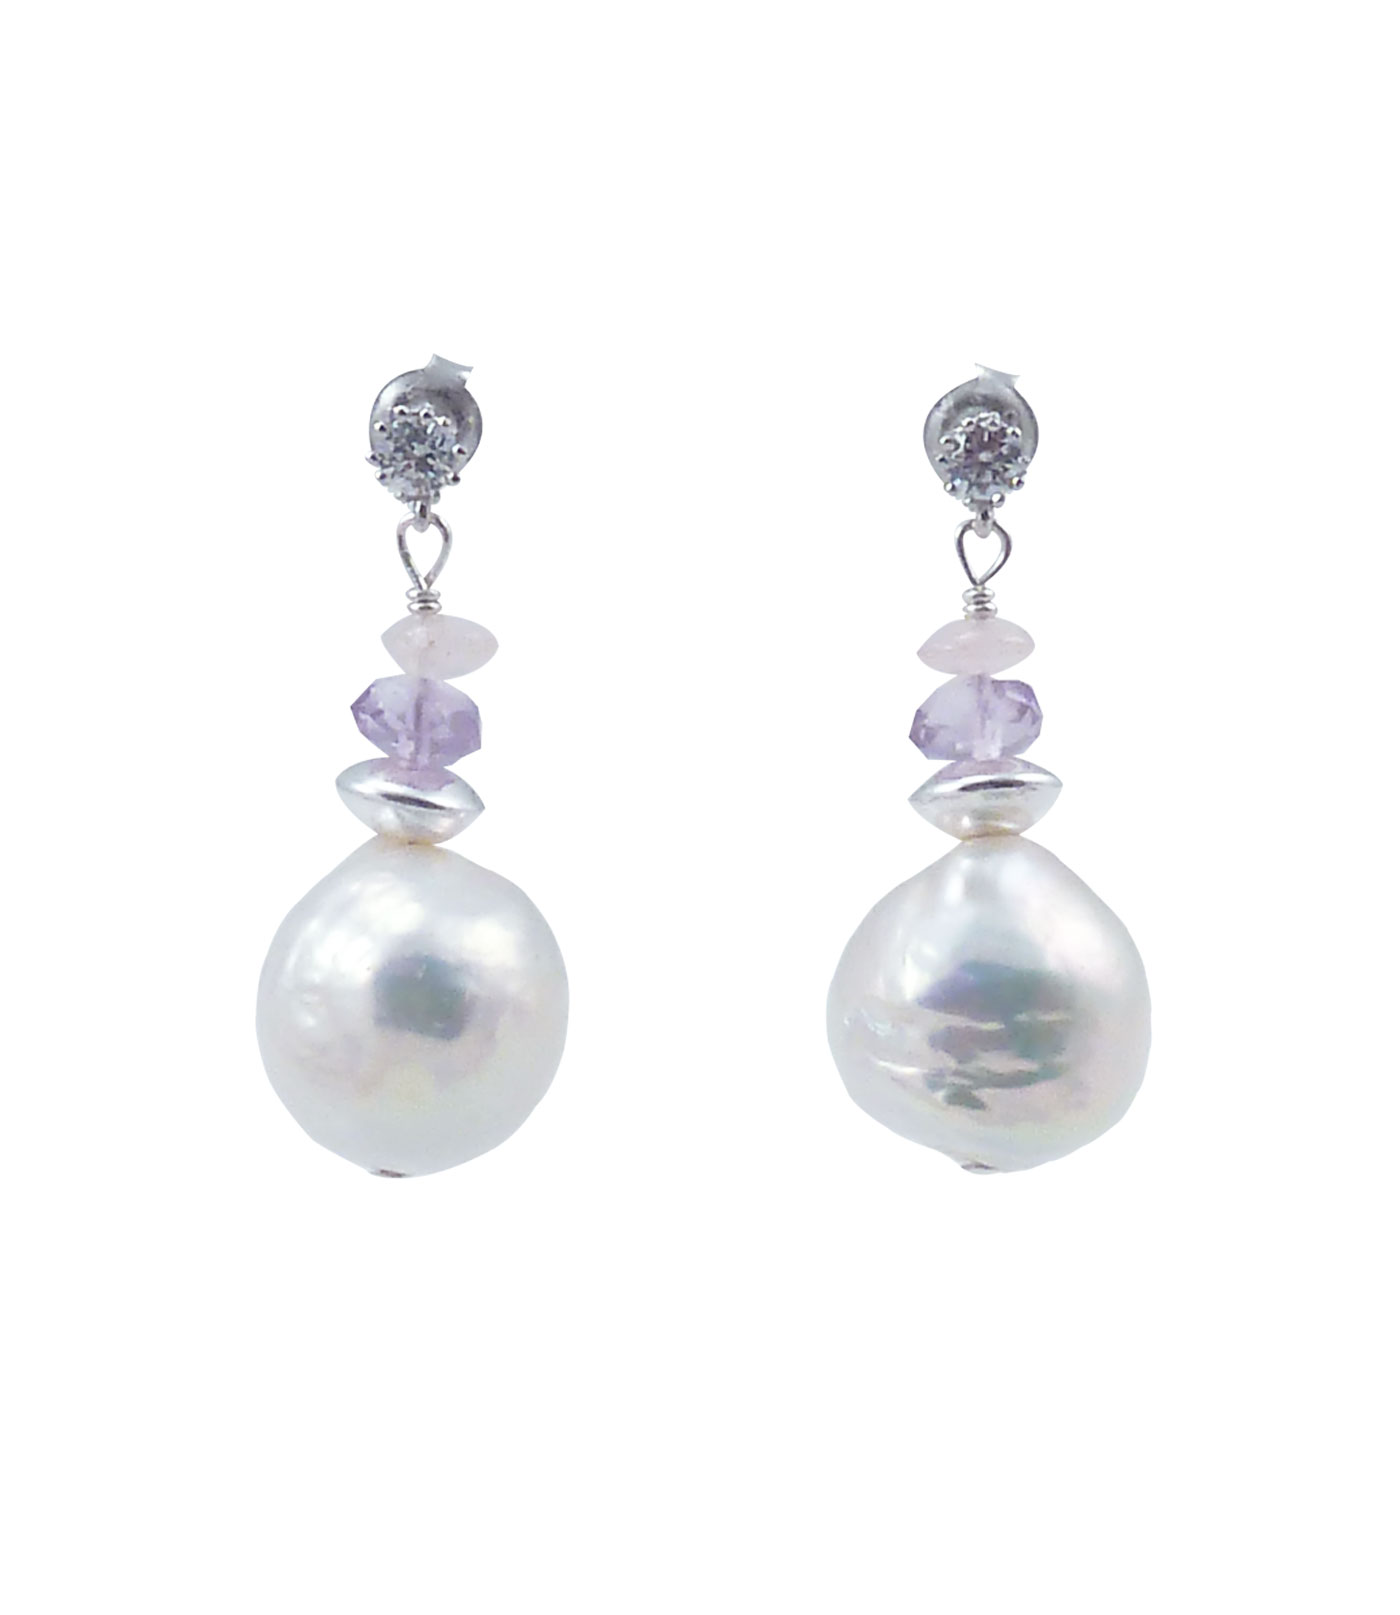 Pearl earrings white Chinese Kasumi pearls. Modern pearl jewelry